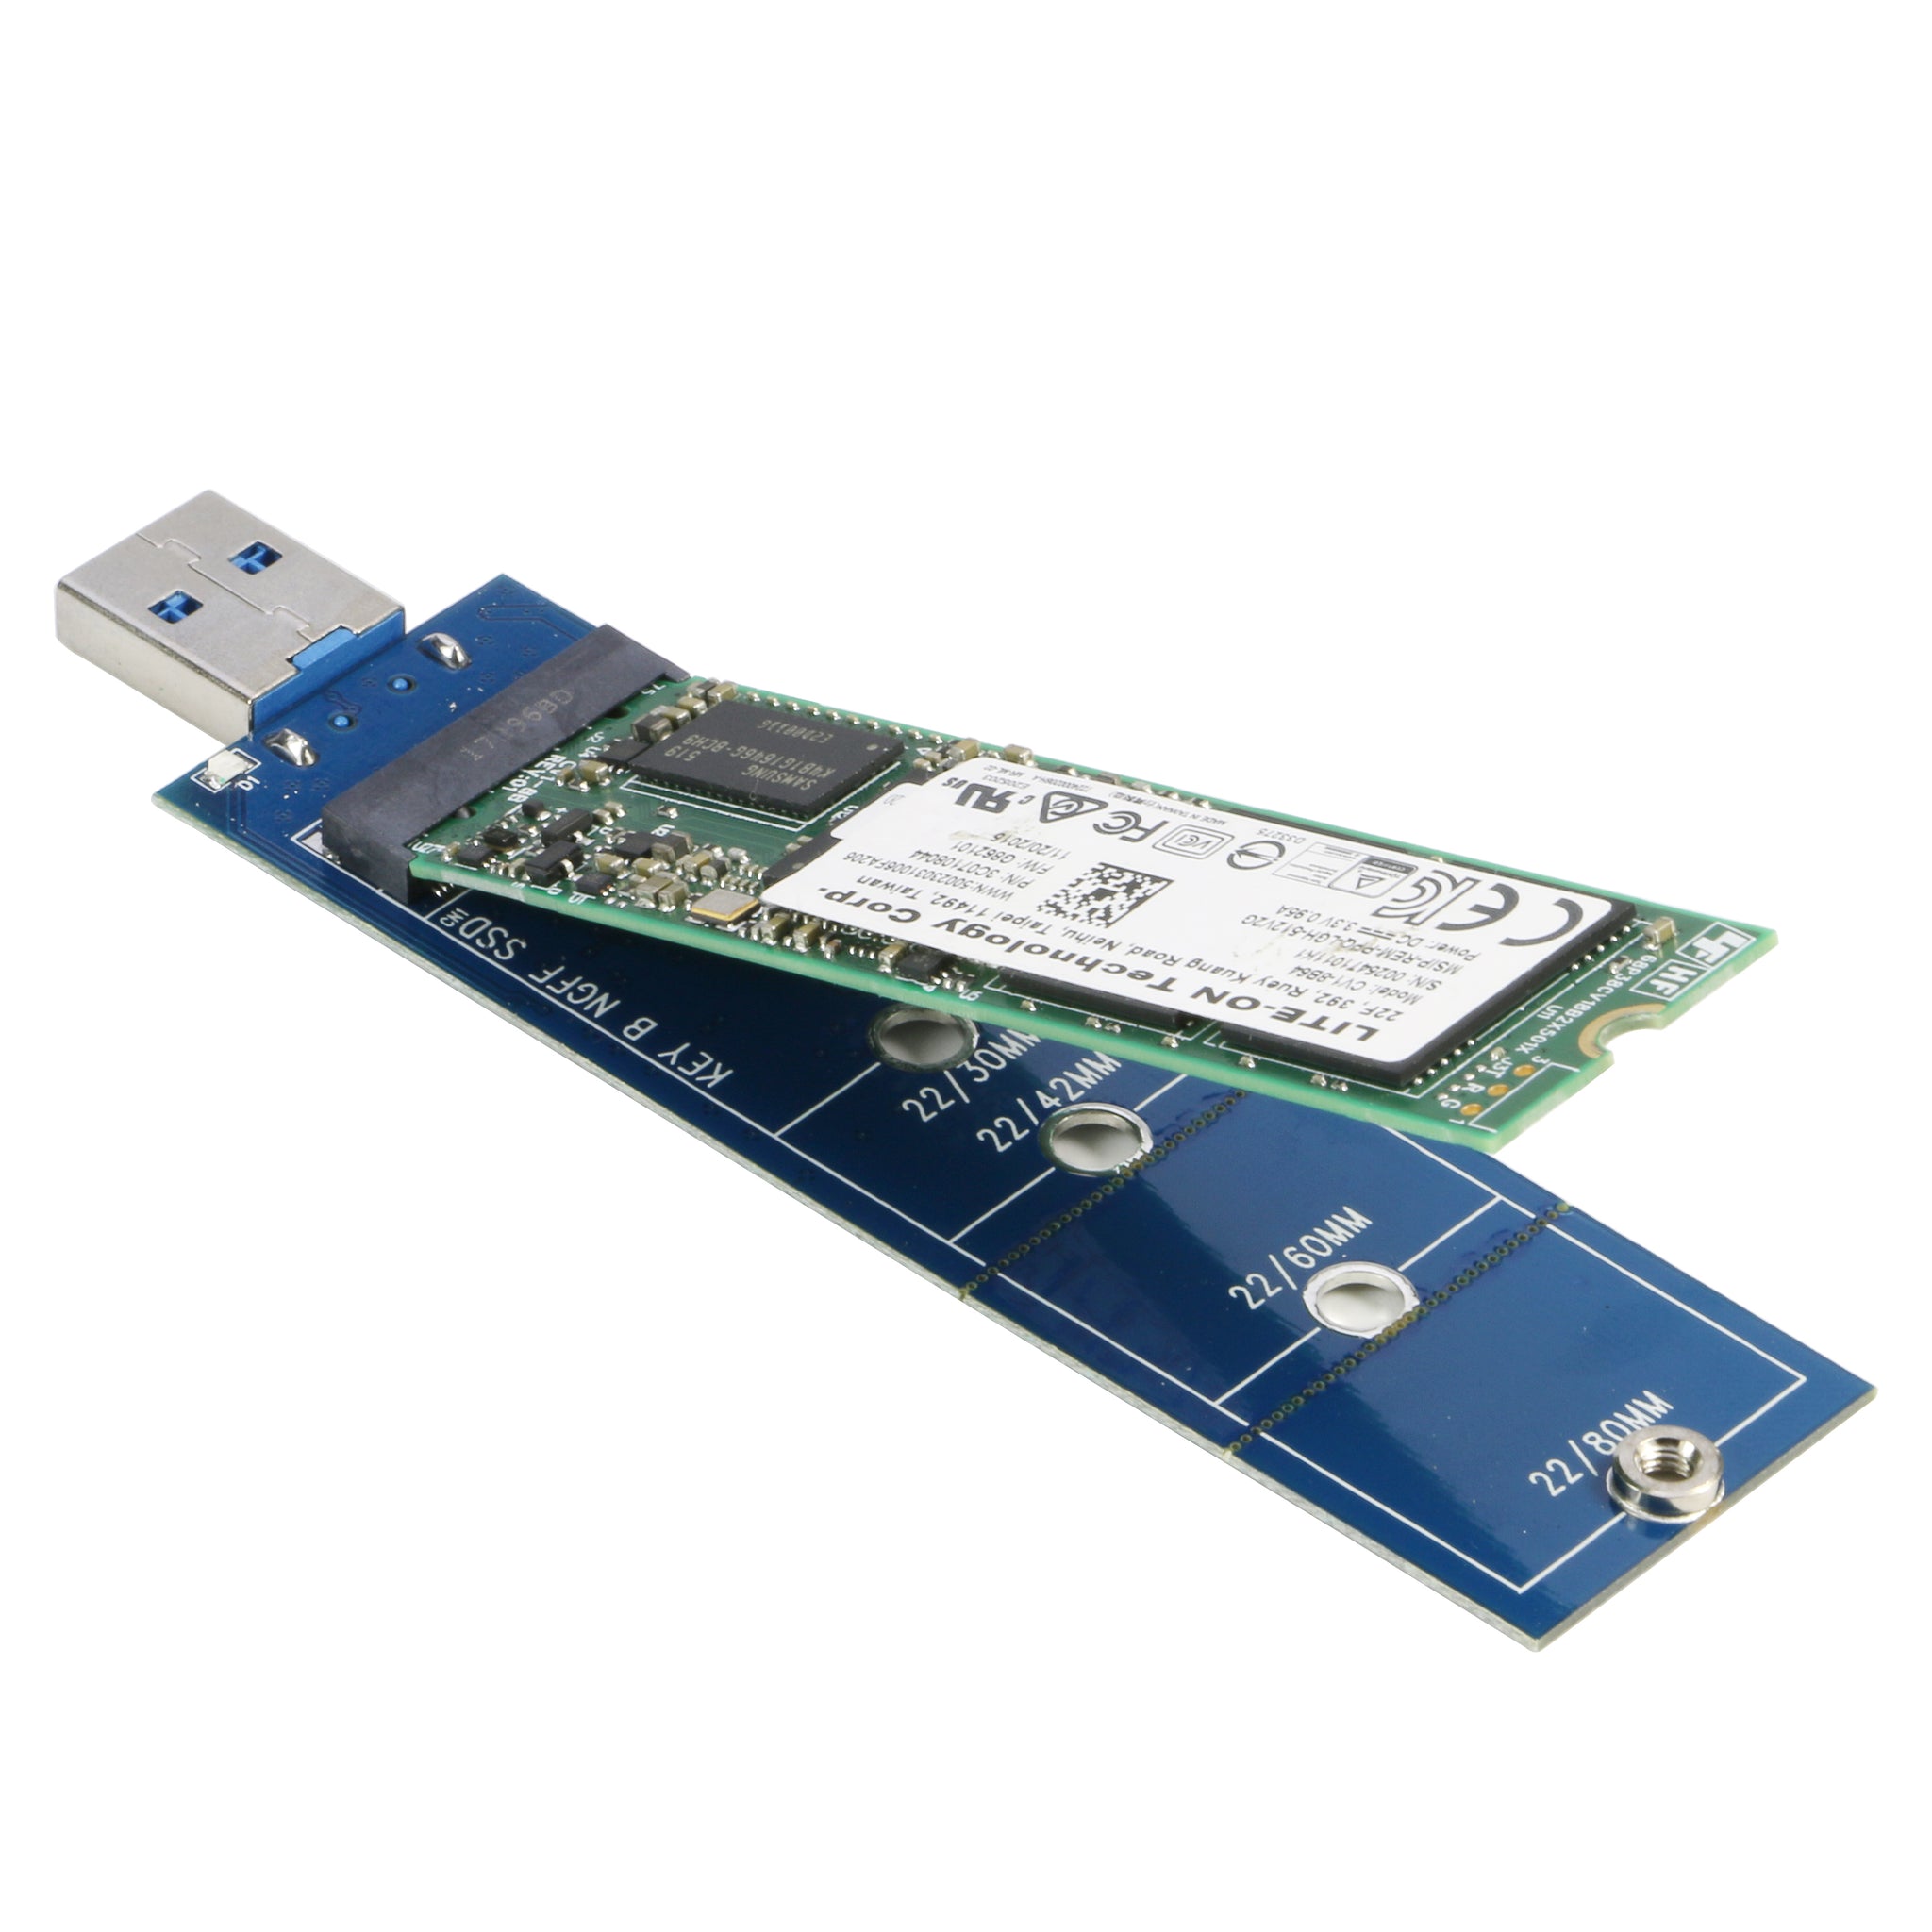 RIITOP M.2 Enclosure USB 3.0, External M.2 SSD (SATA Based) To USB3.0